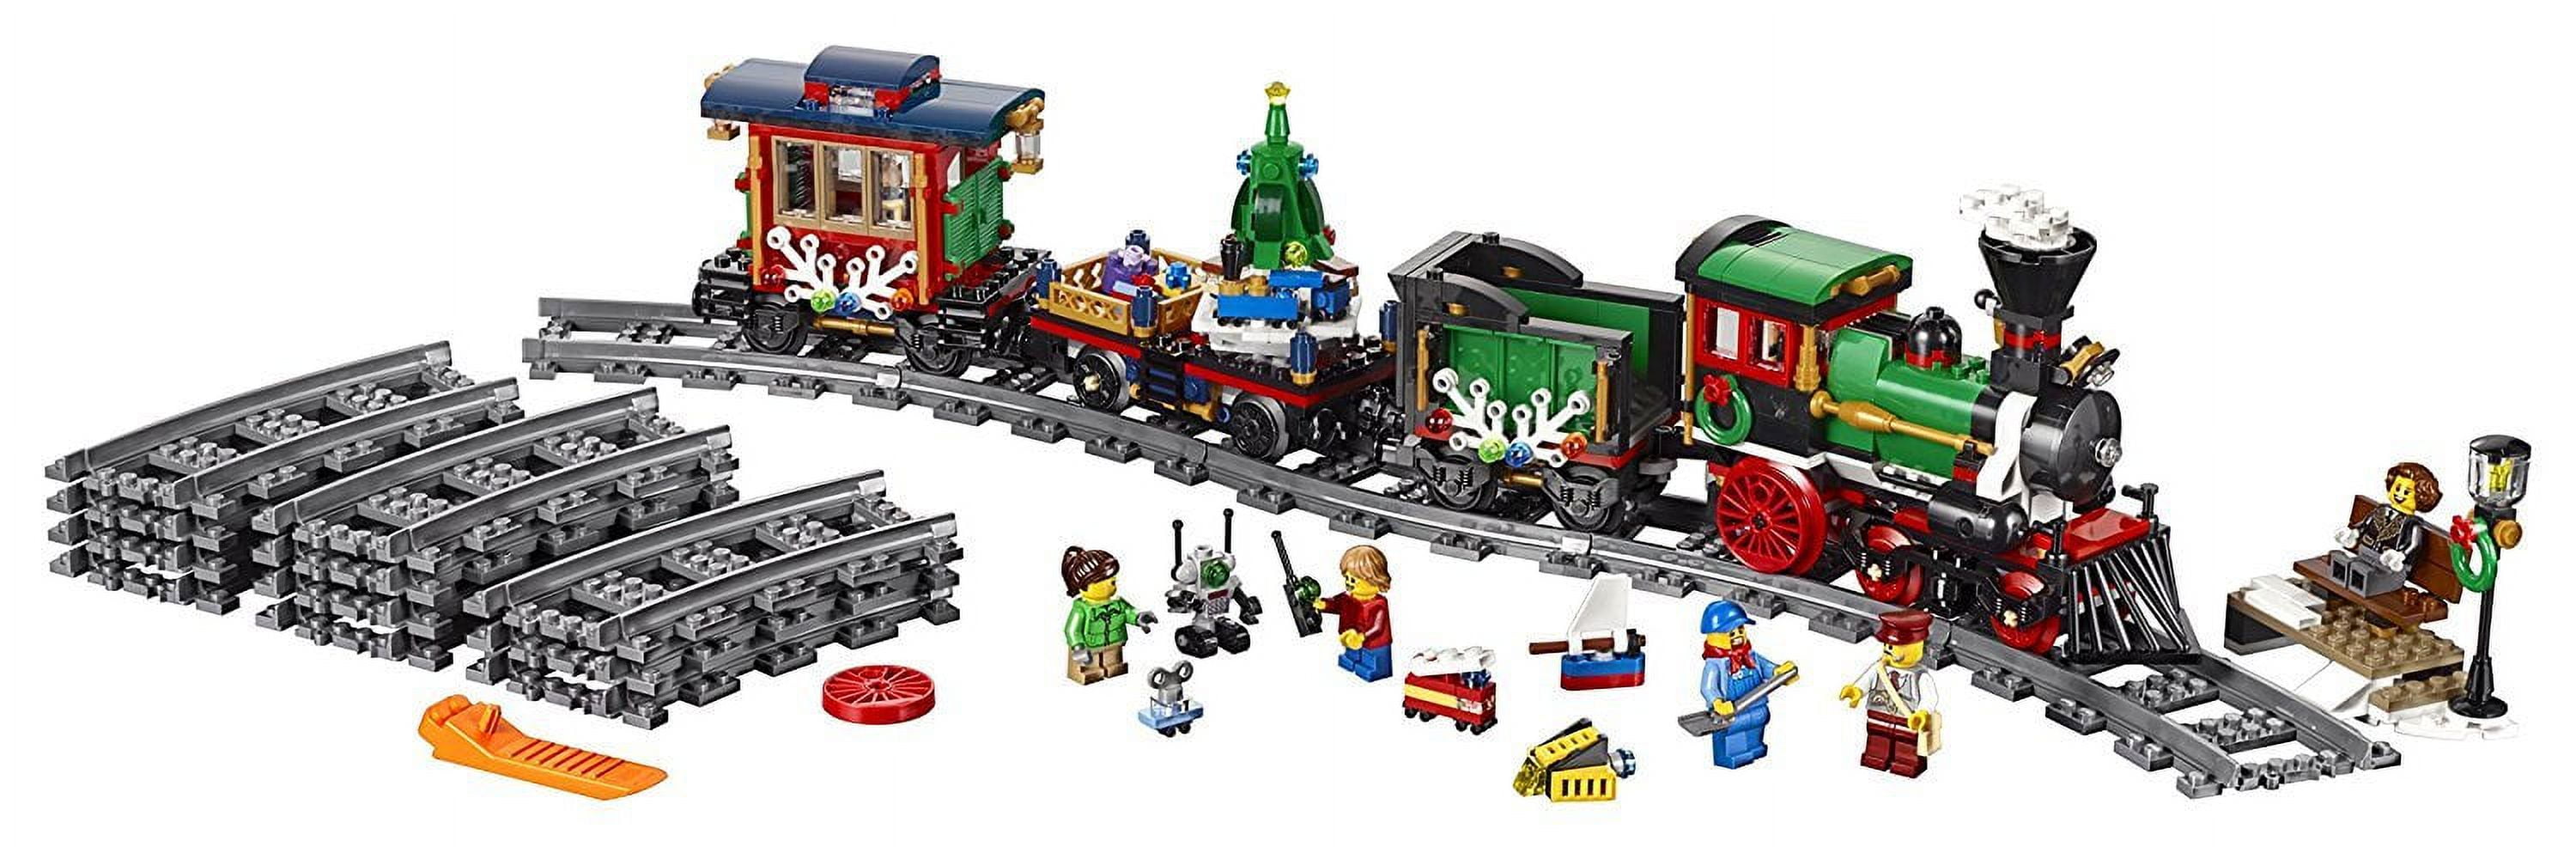 Lego Winter Holiday Train 10254 